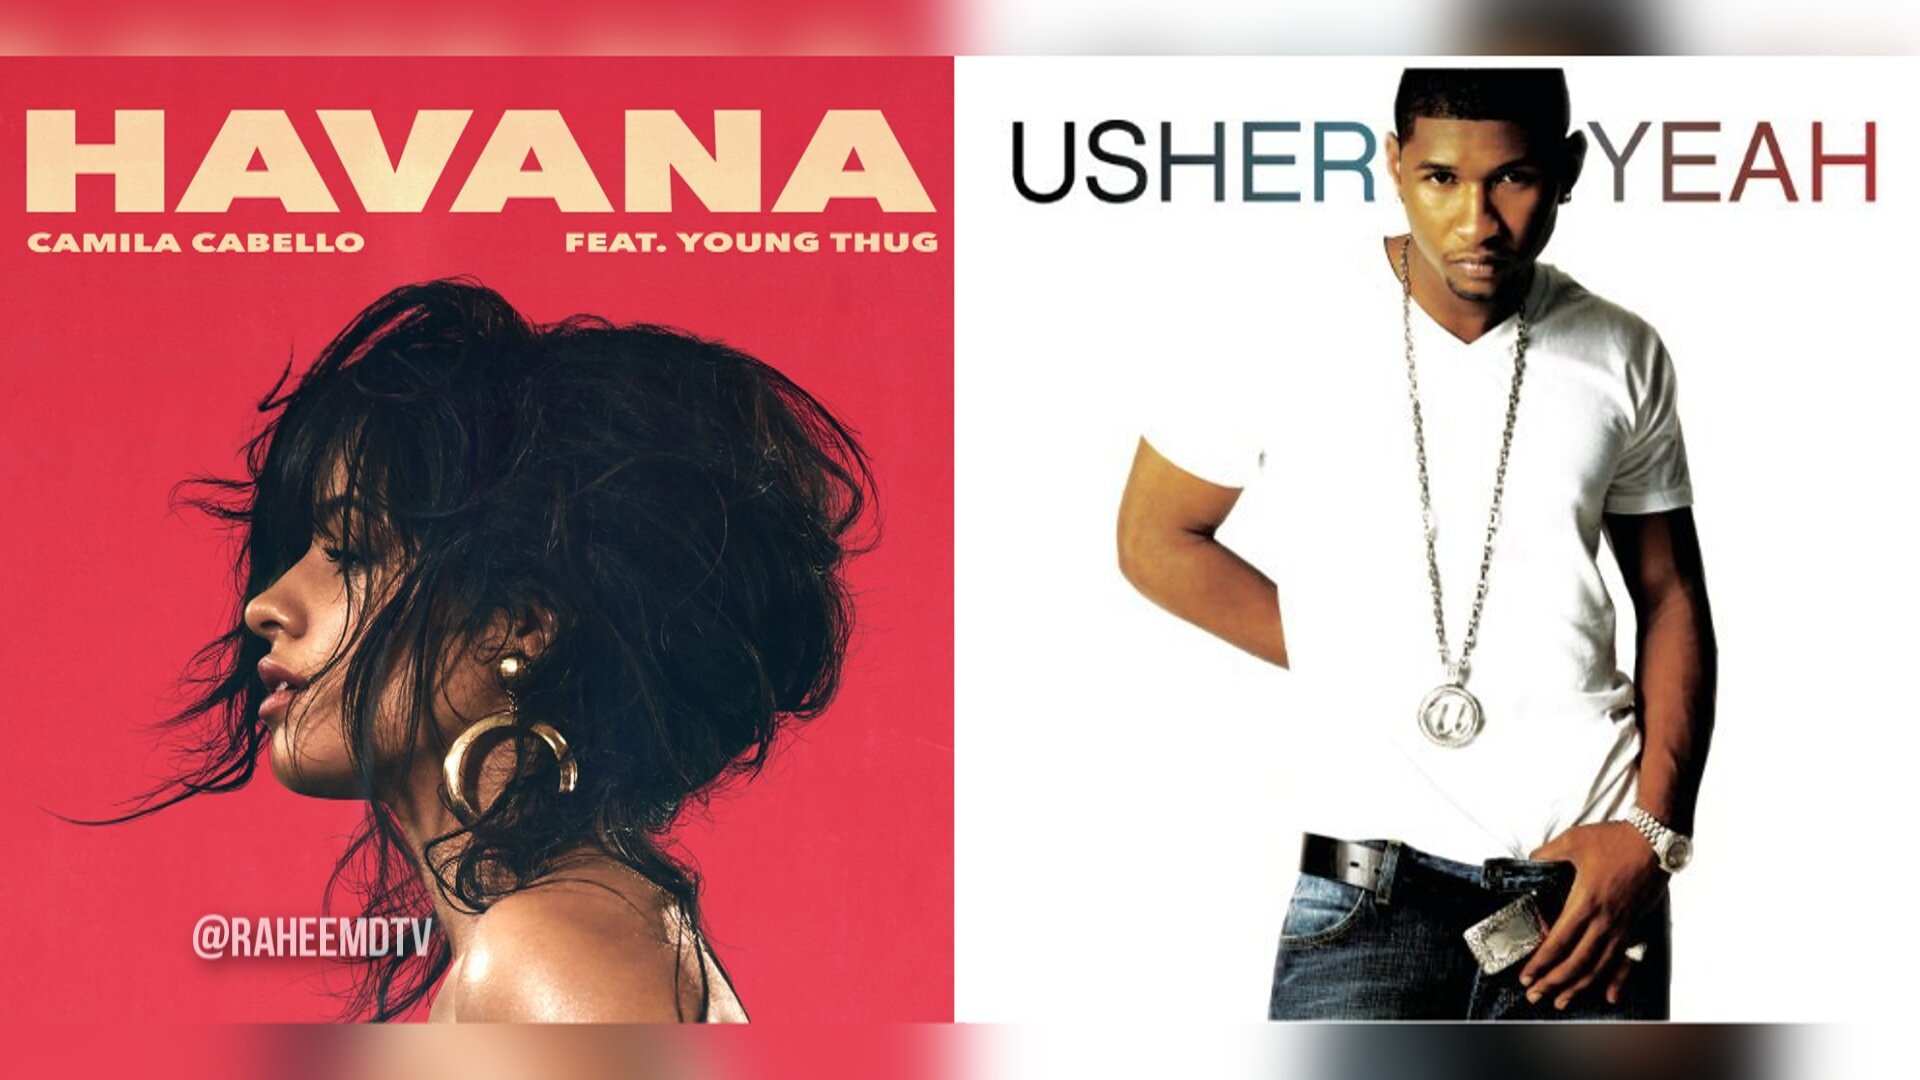 Lil Jon Usher. Usher - yeah! Ft. Lil Jon, Ludacris. Yeah feat Lil Jon Ludacris. Havana певец. Yeah usher feat